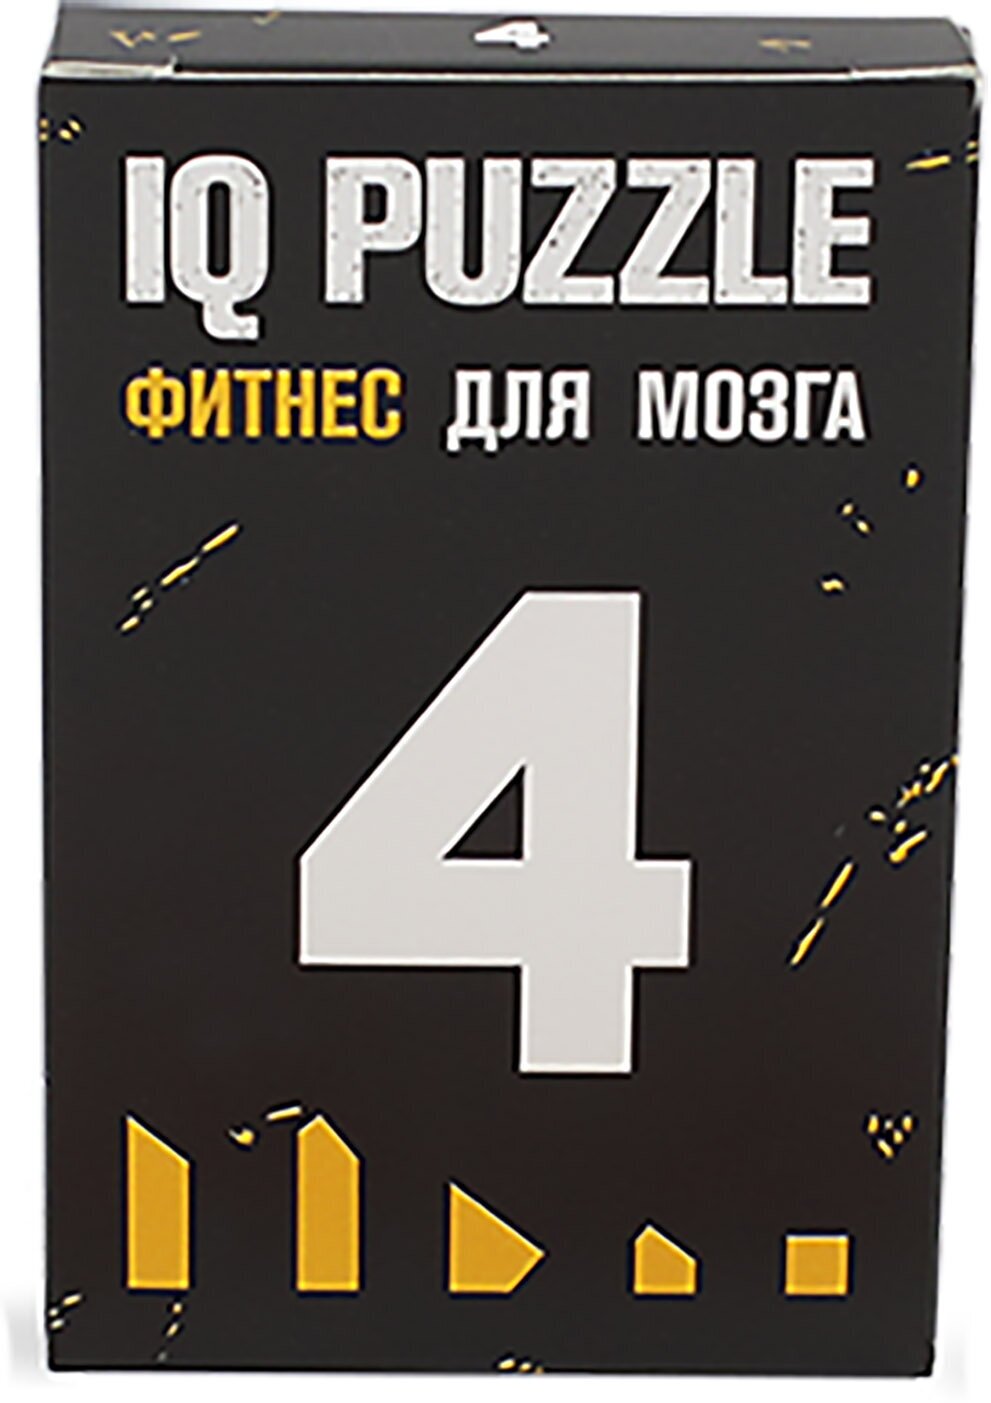 Головоломки для взрослых IQ развивающая игра пазл Цифра 4 / IQ PUZZLE для детей тренажер для мозга — купить в интернет-магазине по низкой цене на Яндекс Маркете